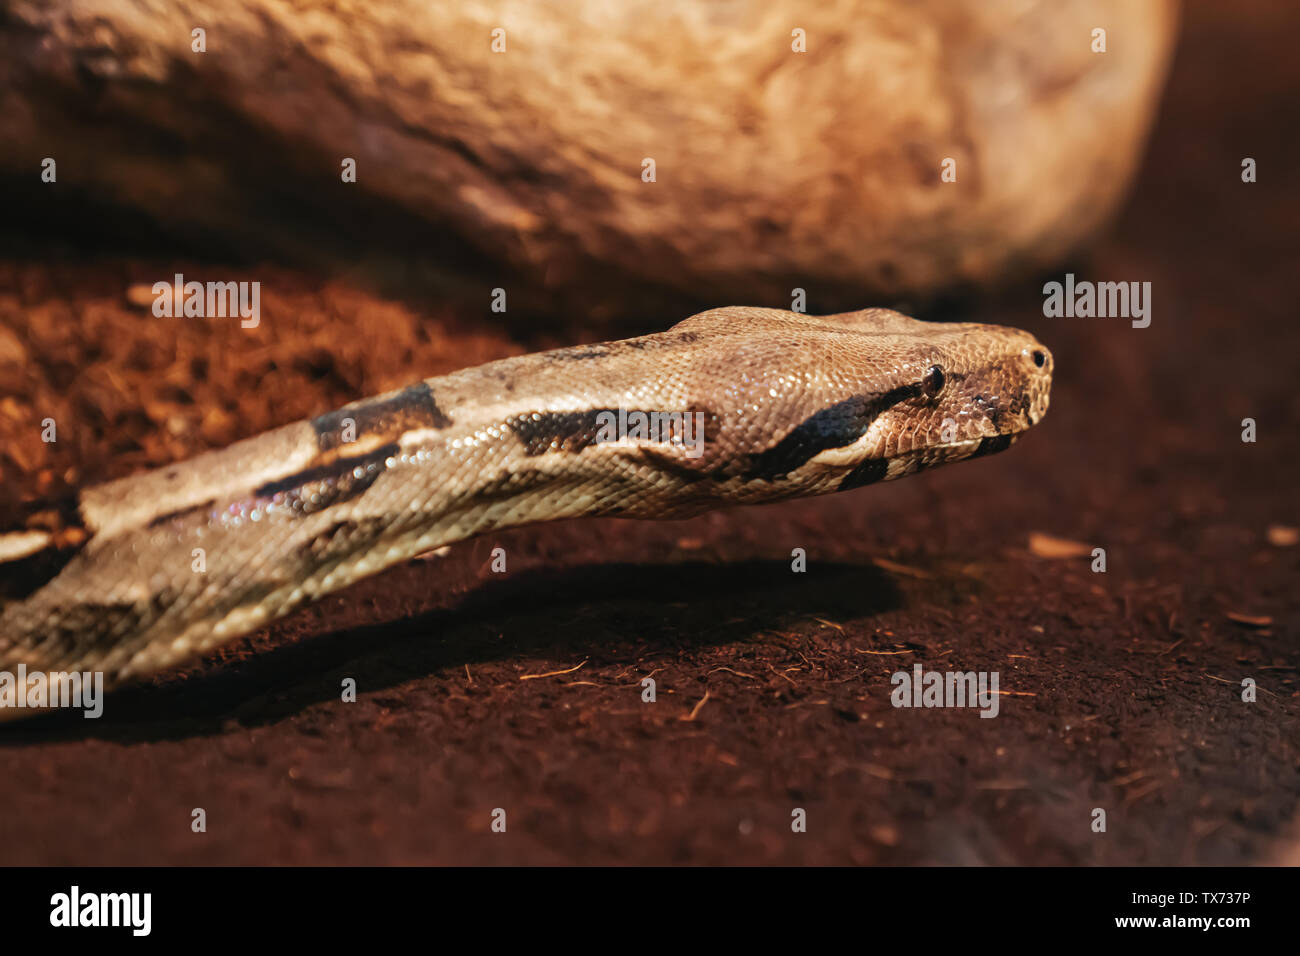 Close up snake head on the soil. Wildlife animals Stock Photo